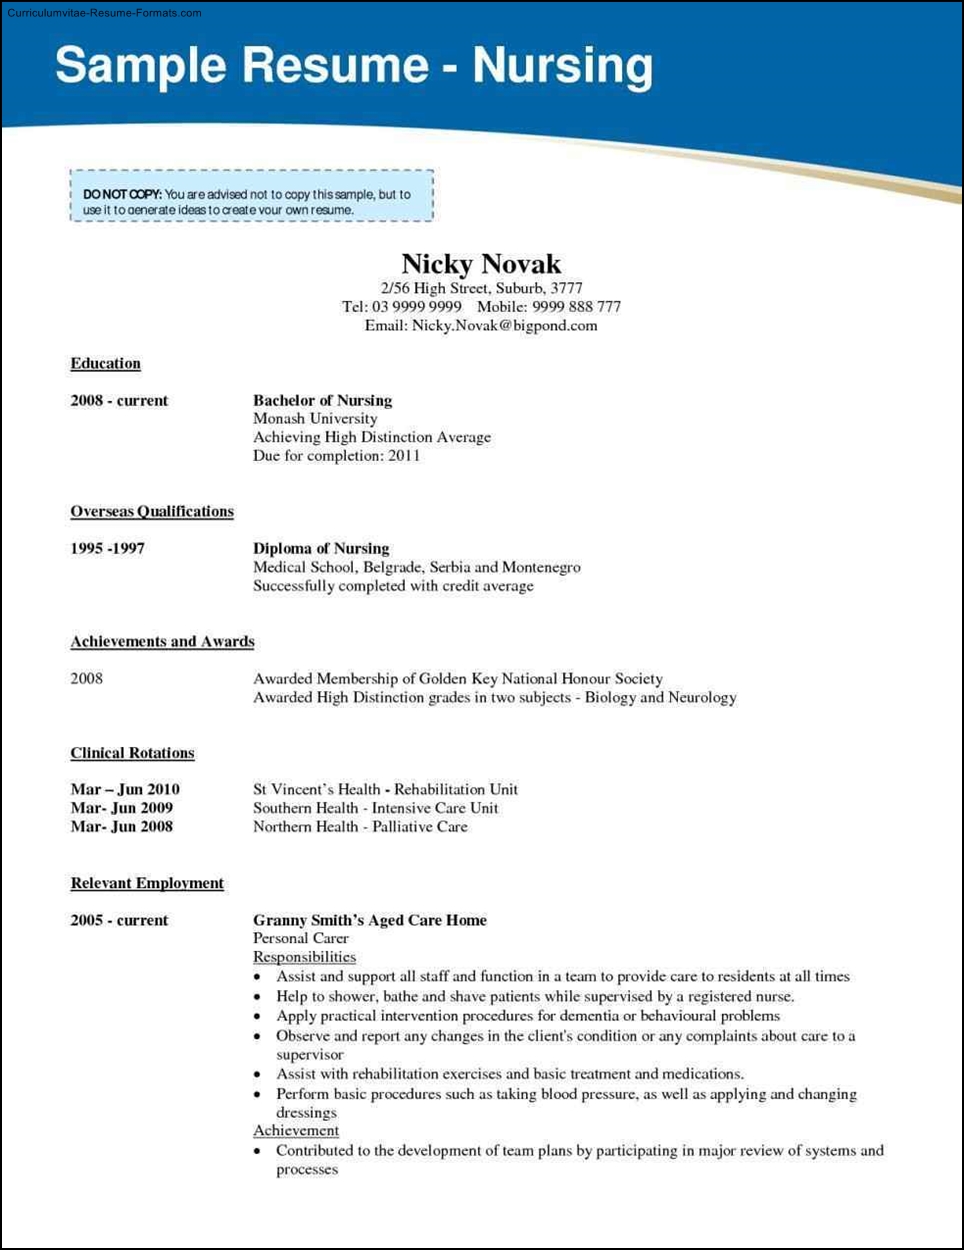 sample resume for nursing students applicants